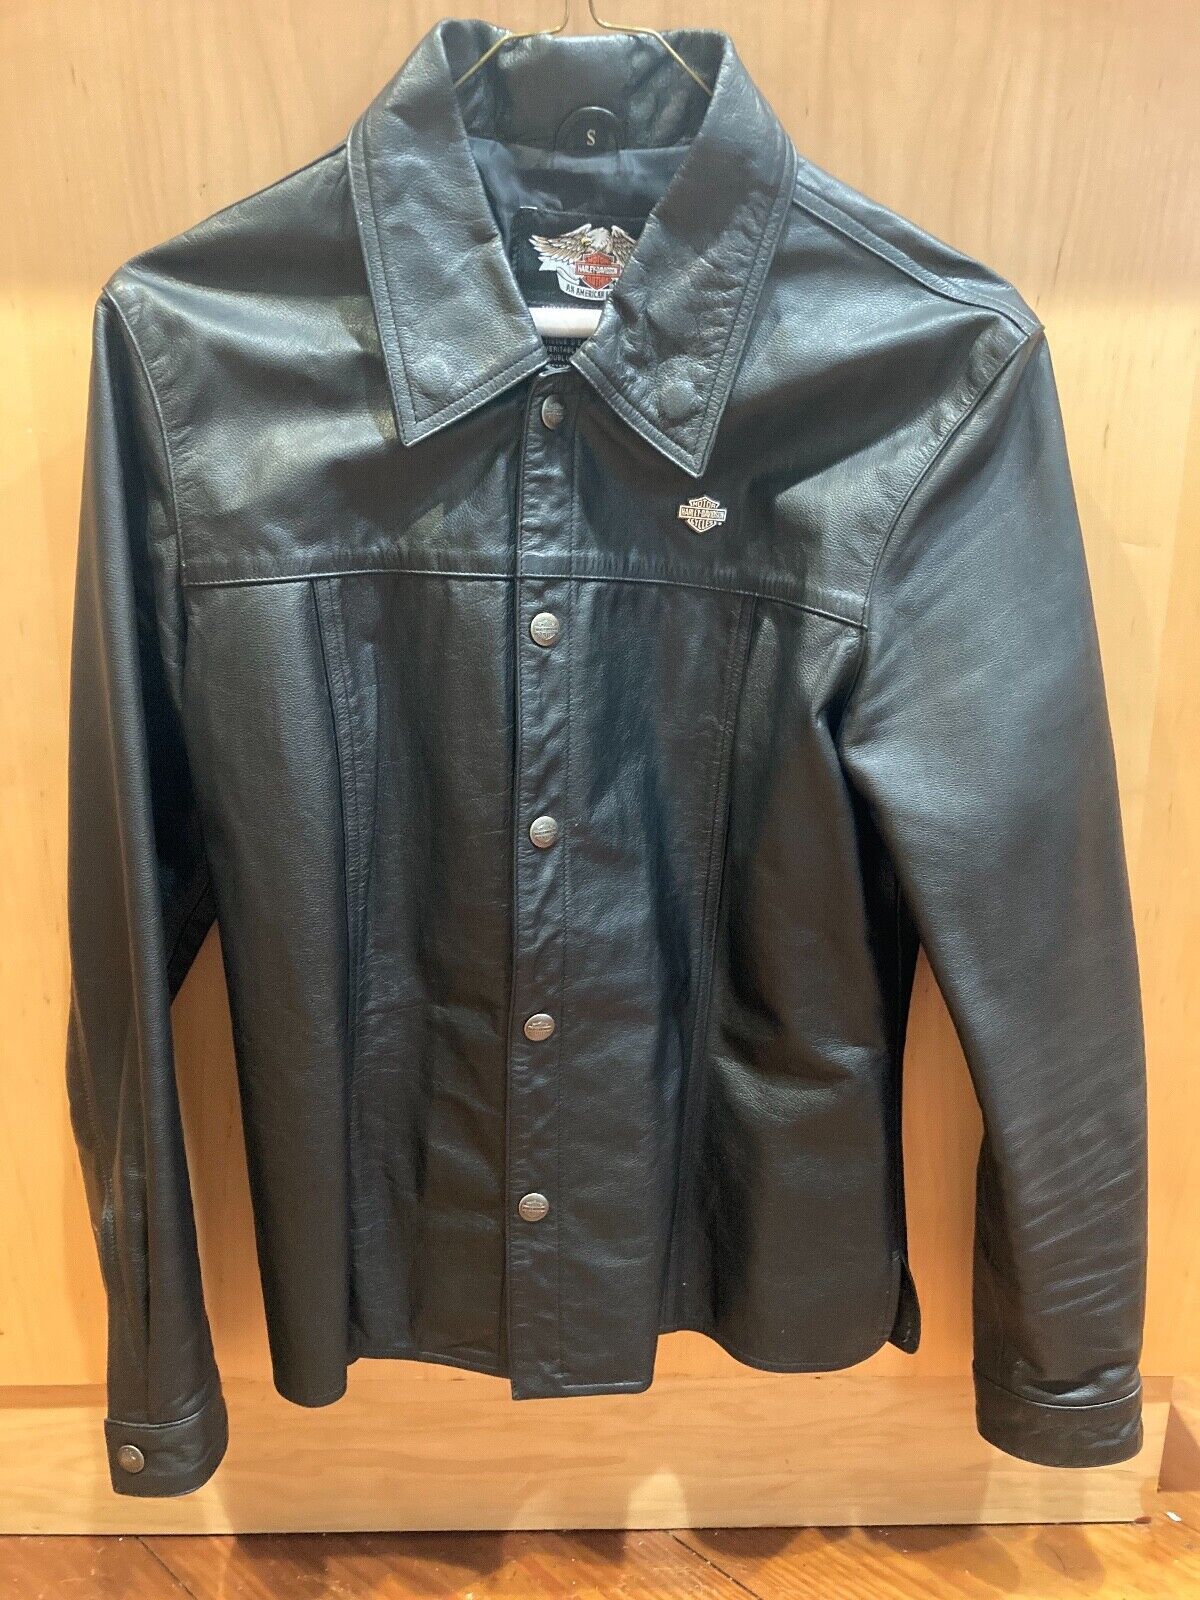 NOS Harley Davidson Genuine Soft Leather Jacket - Ladies Size Small